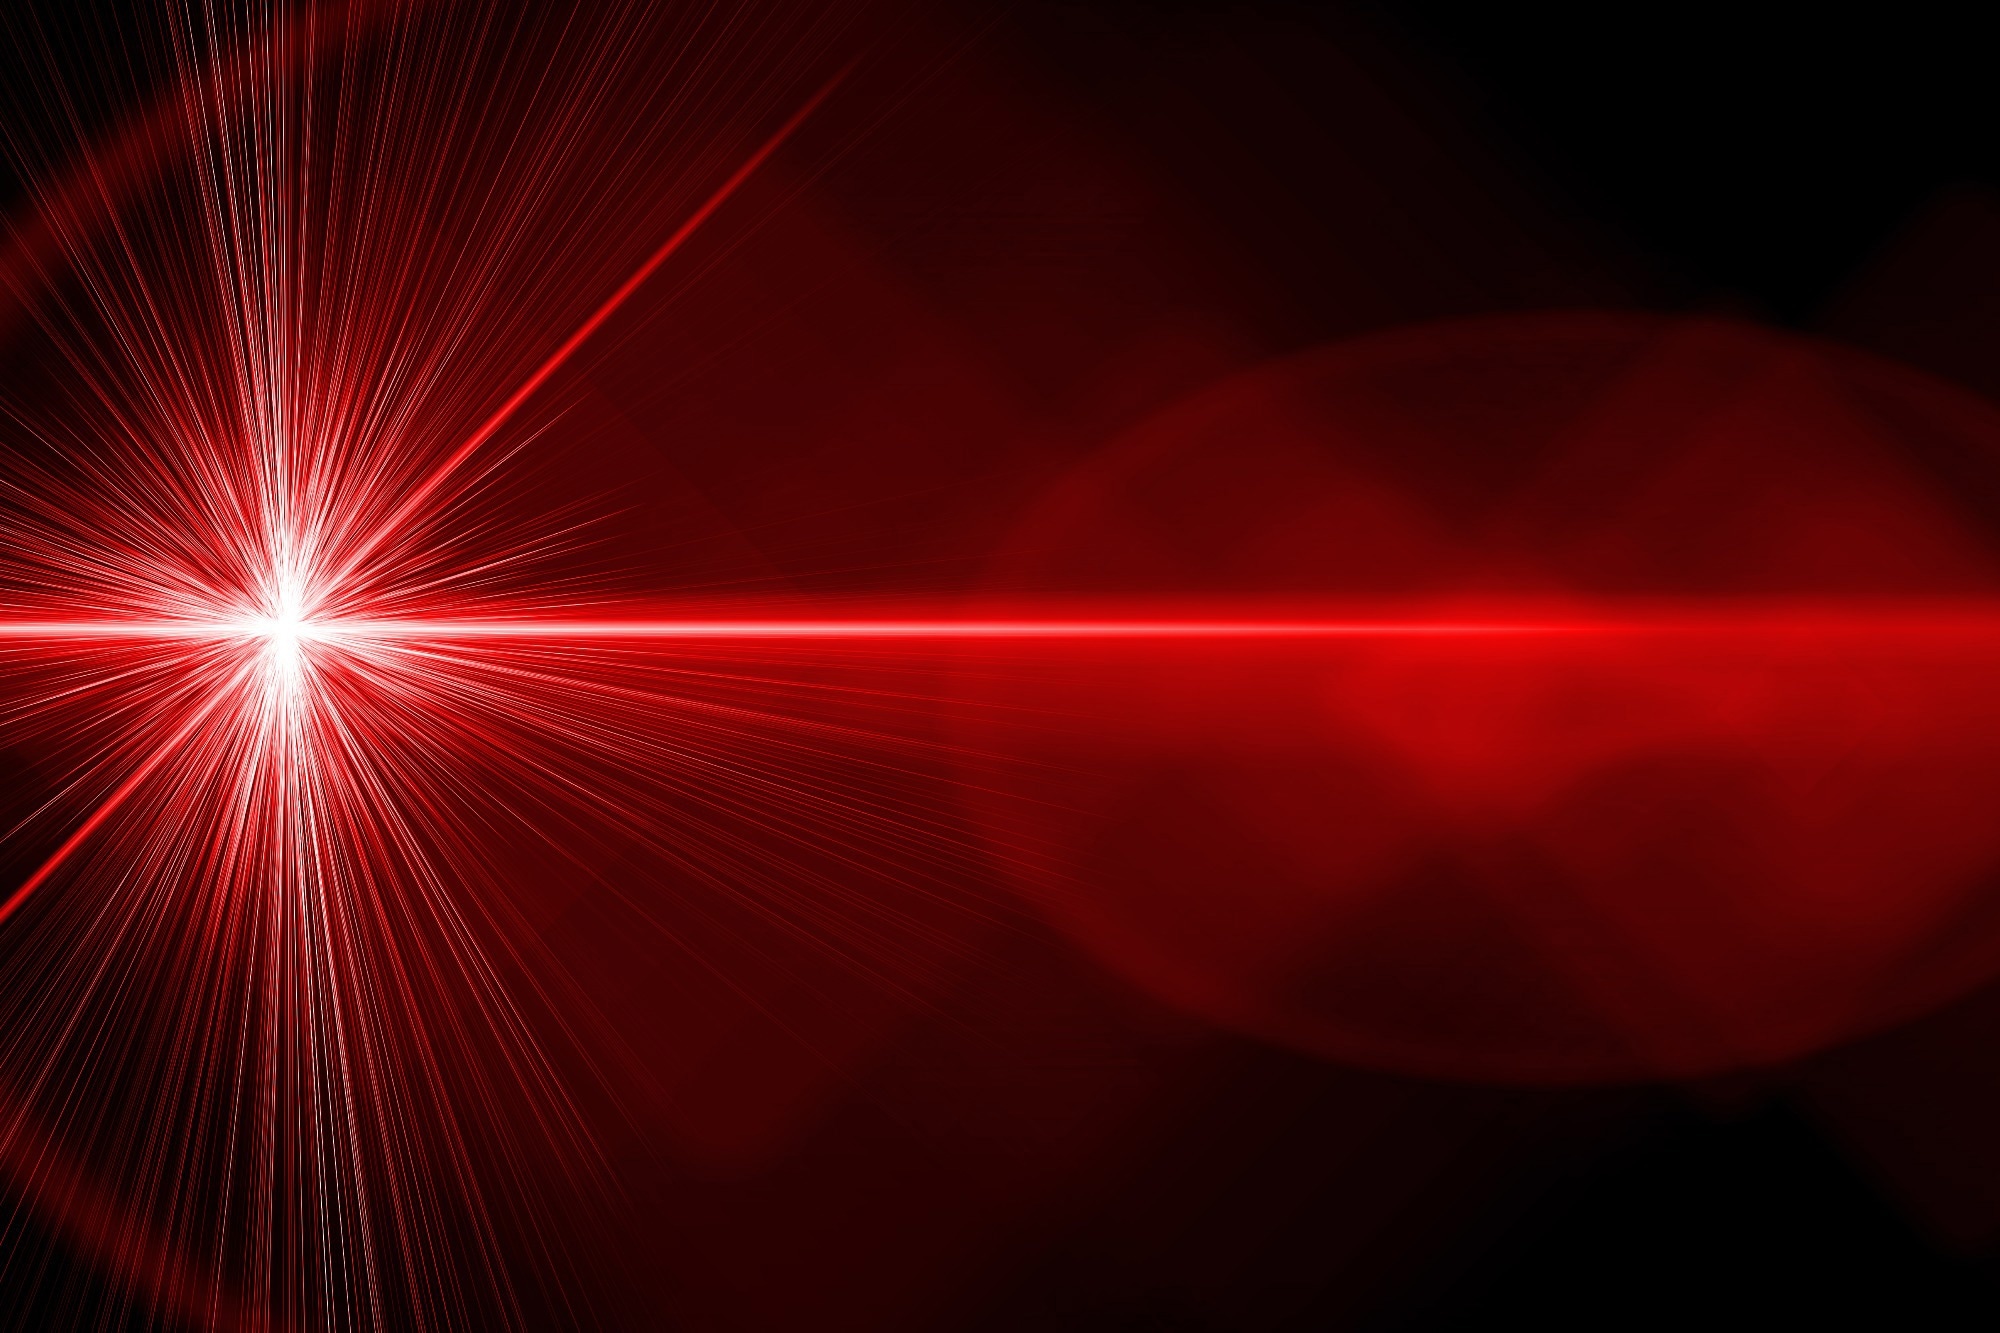 Enhancing Visible-Wavelength Fiber Laser Technology